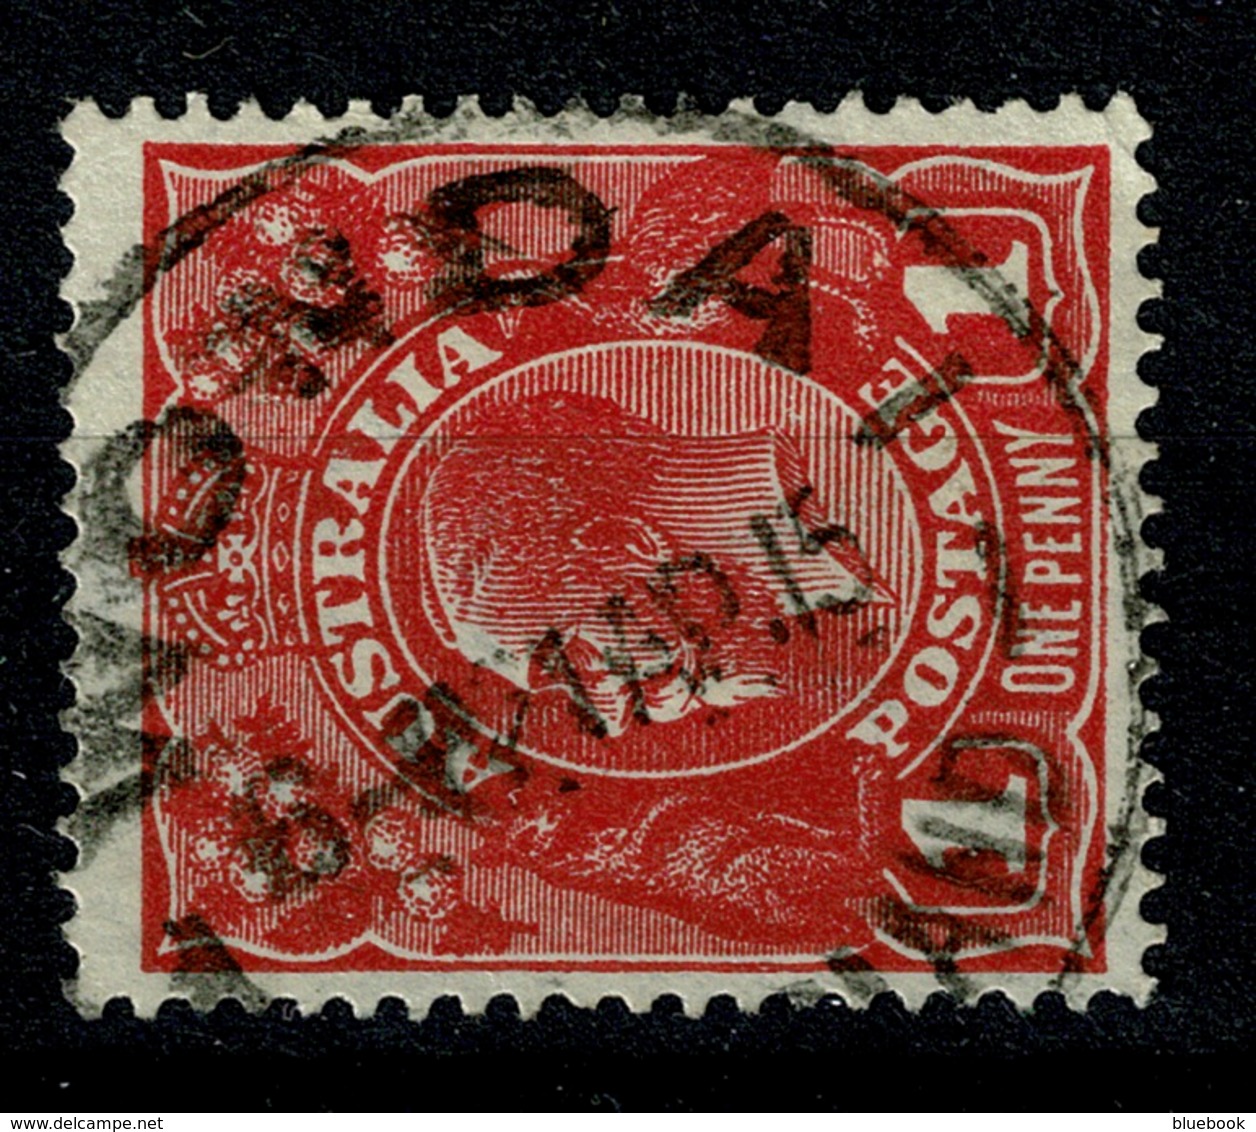 Ref 1258 - 1915 Australia KGV 1d Head Used Stamp - Scarce Wondai Queensland Postmark - Used Stamps